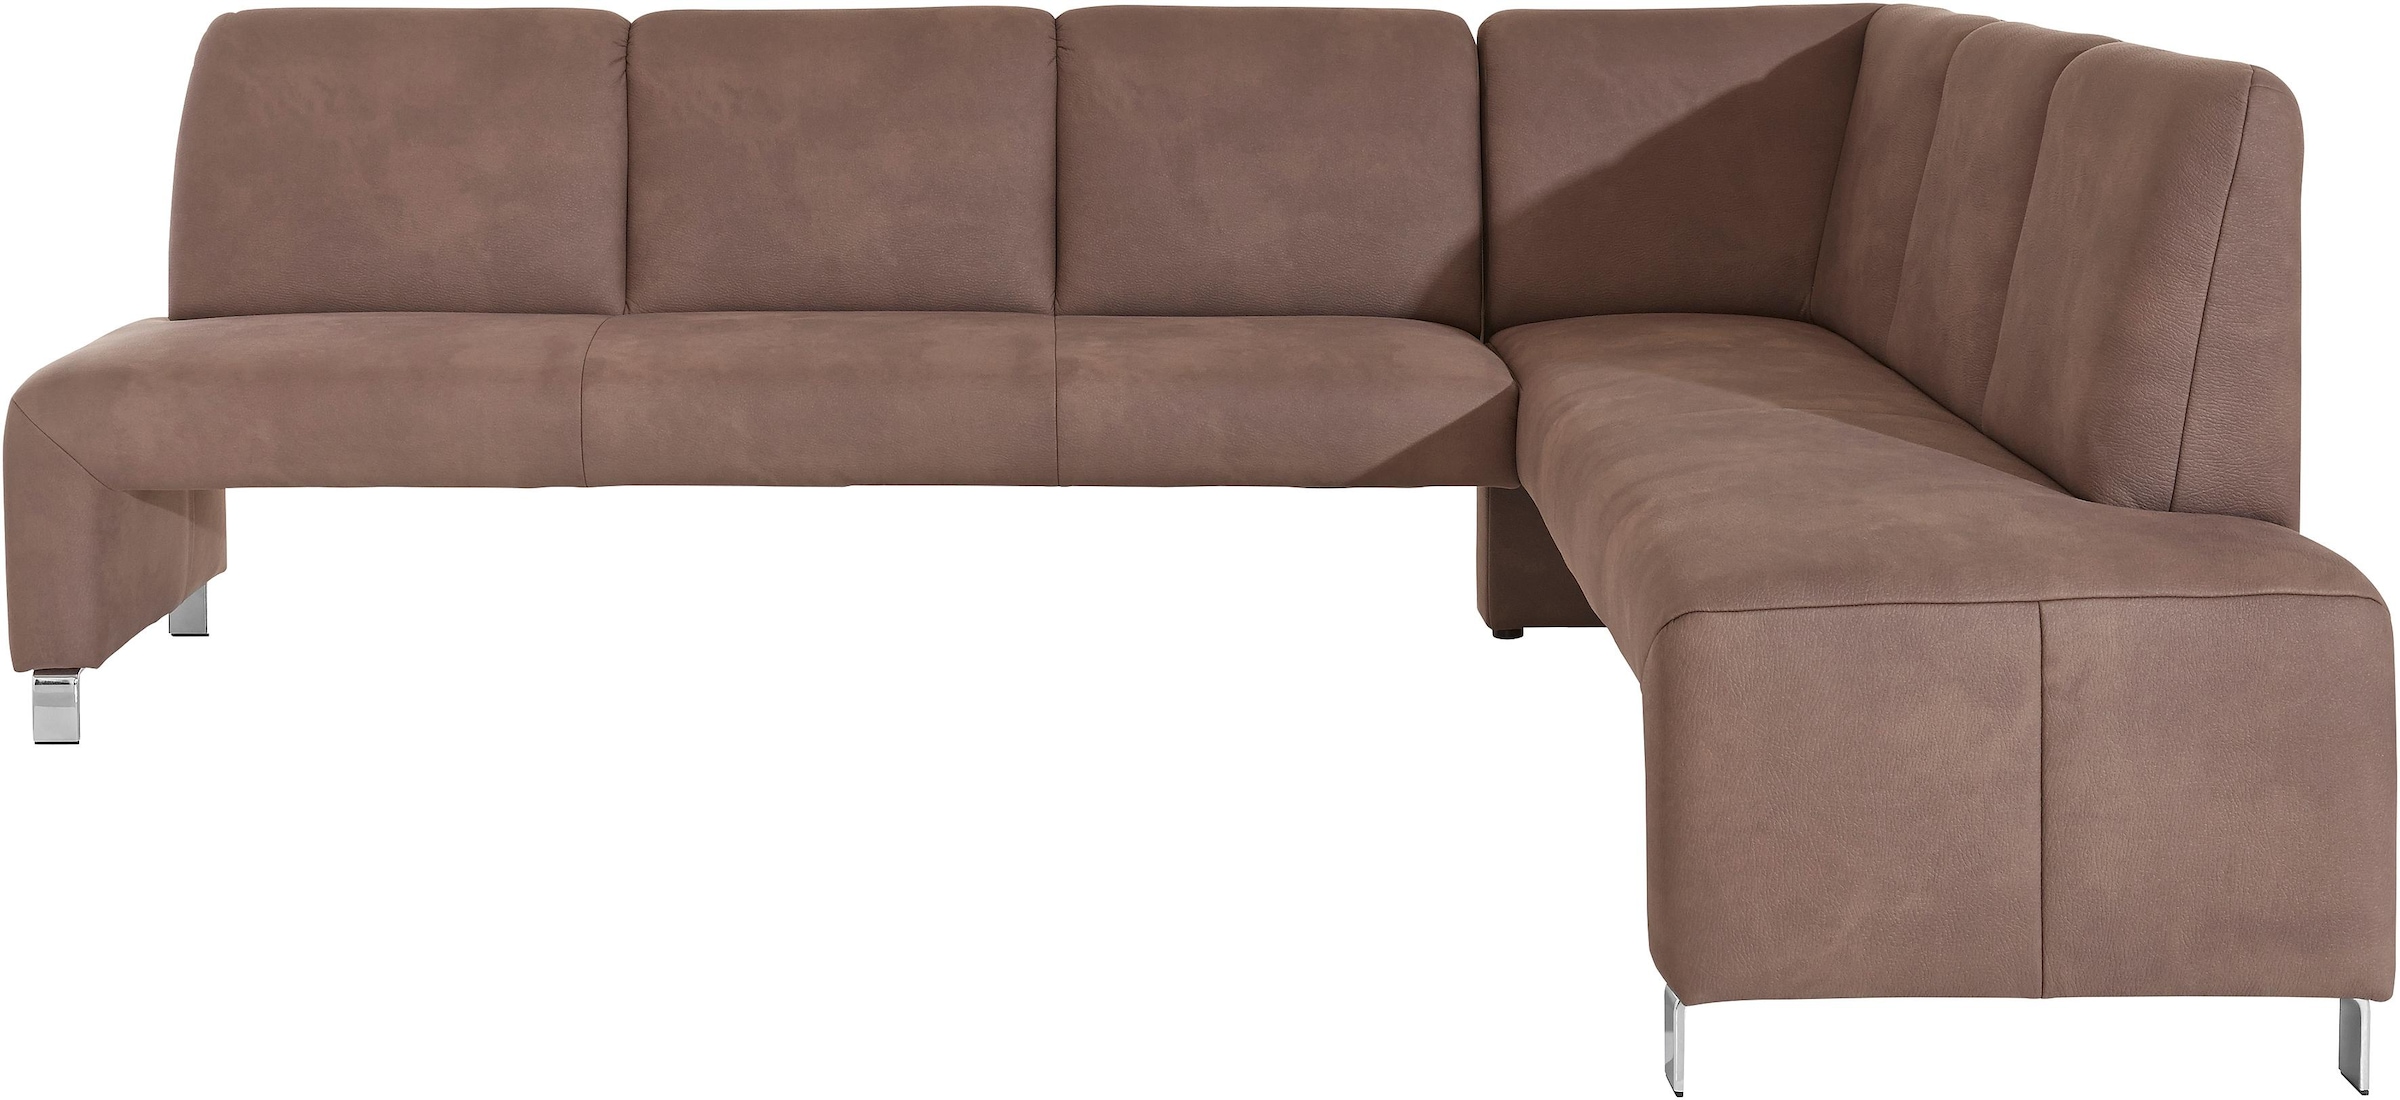 Frei Online im Eckbank exxpo Shop OTTO stellbar fashion Raum - sofa »Intenso«,